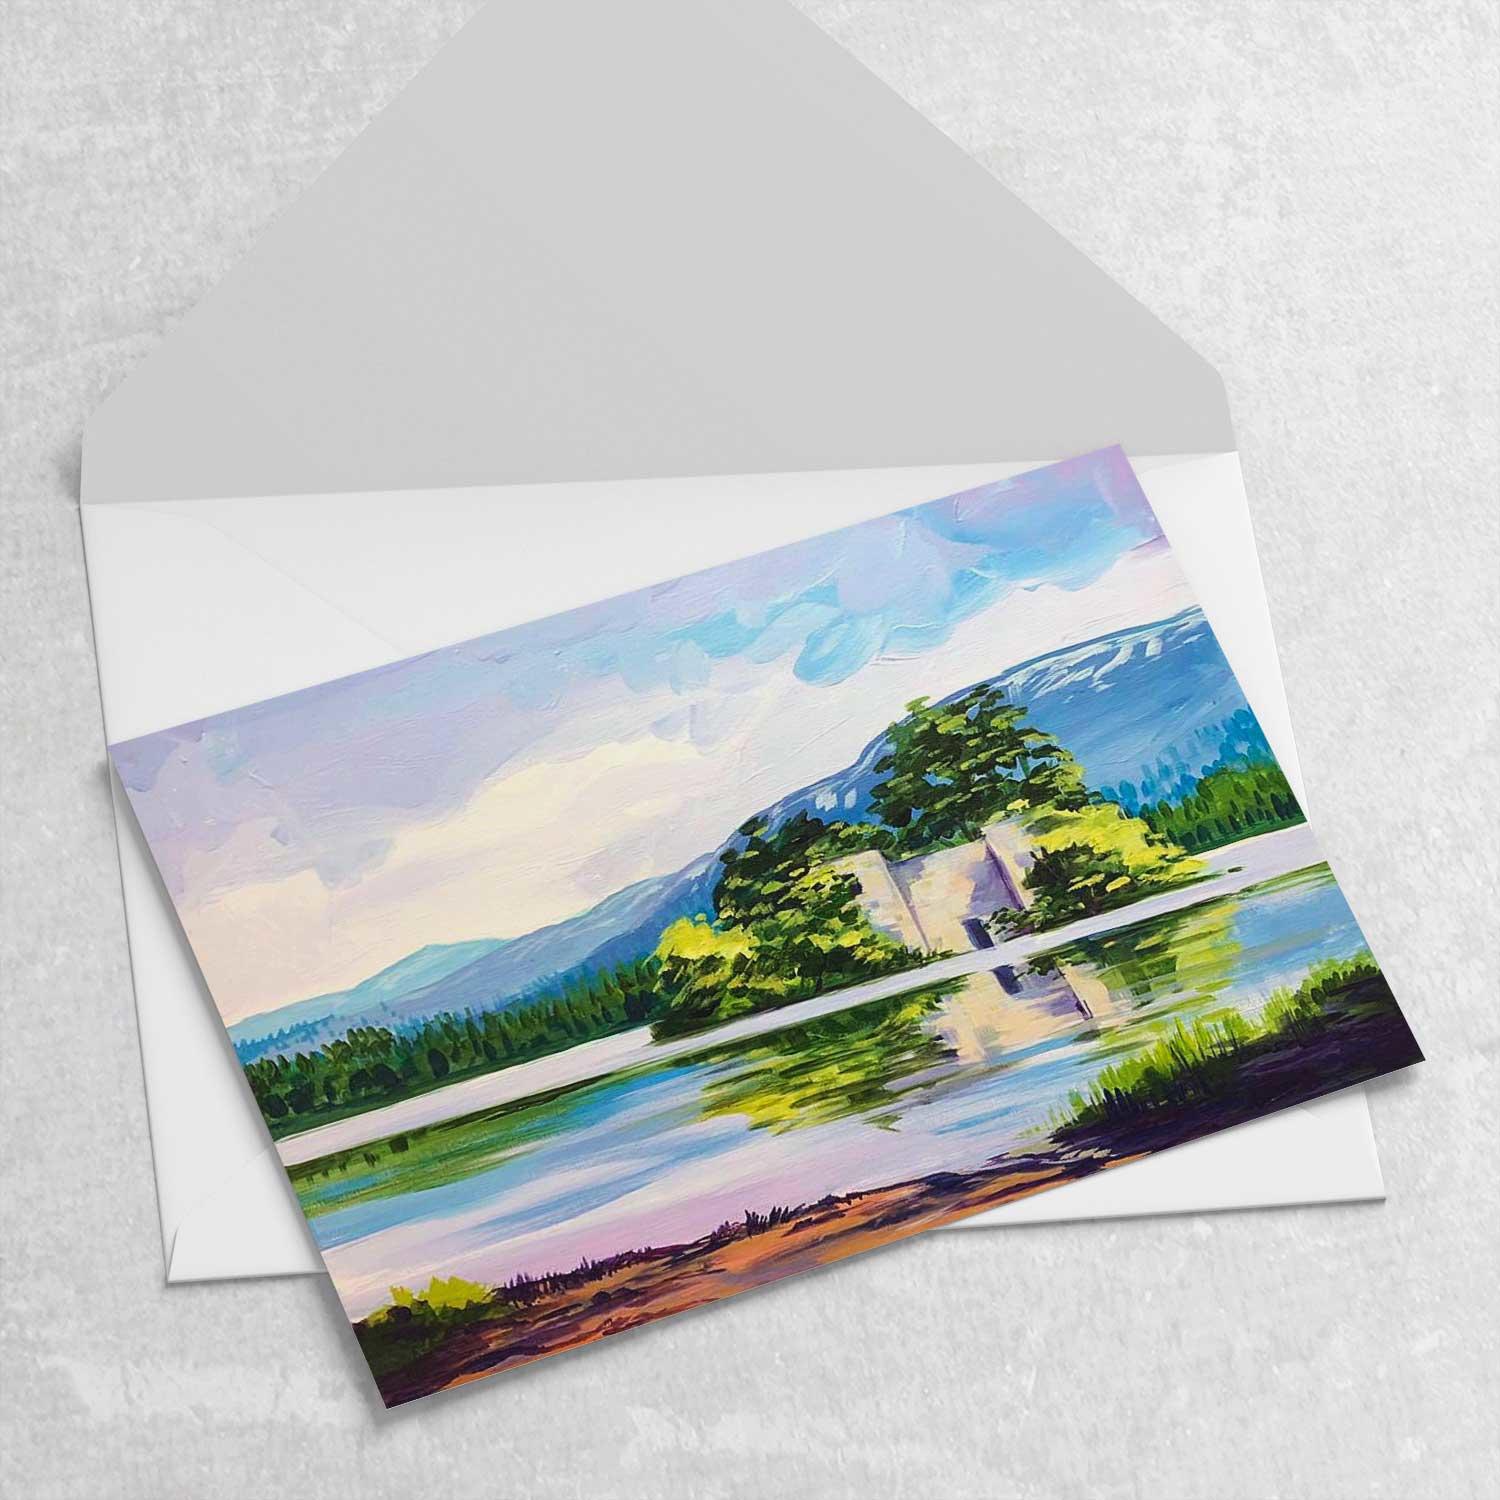 Springtime at Loch Eilein Greeting Card from an original painting by artist Ann Vastano